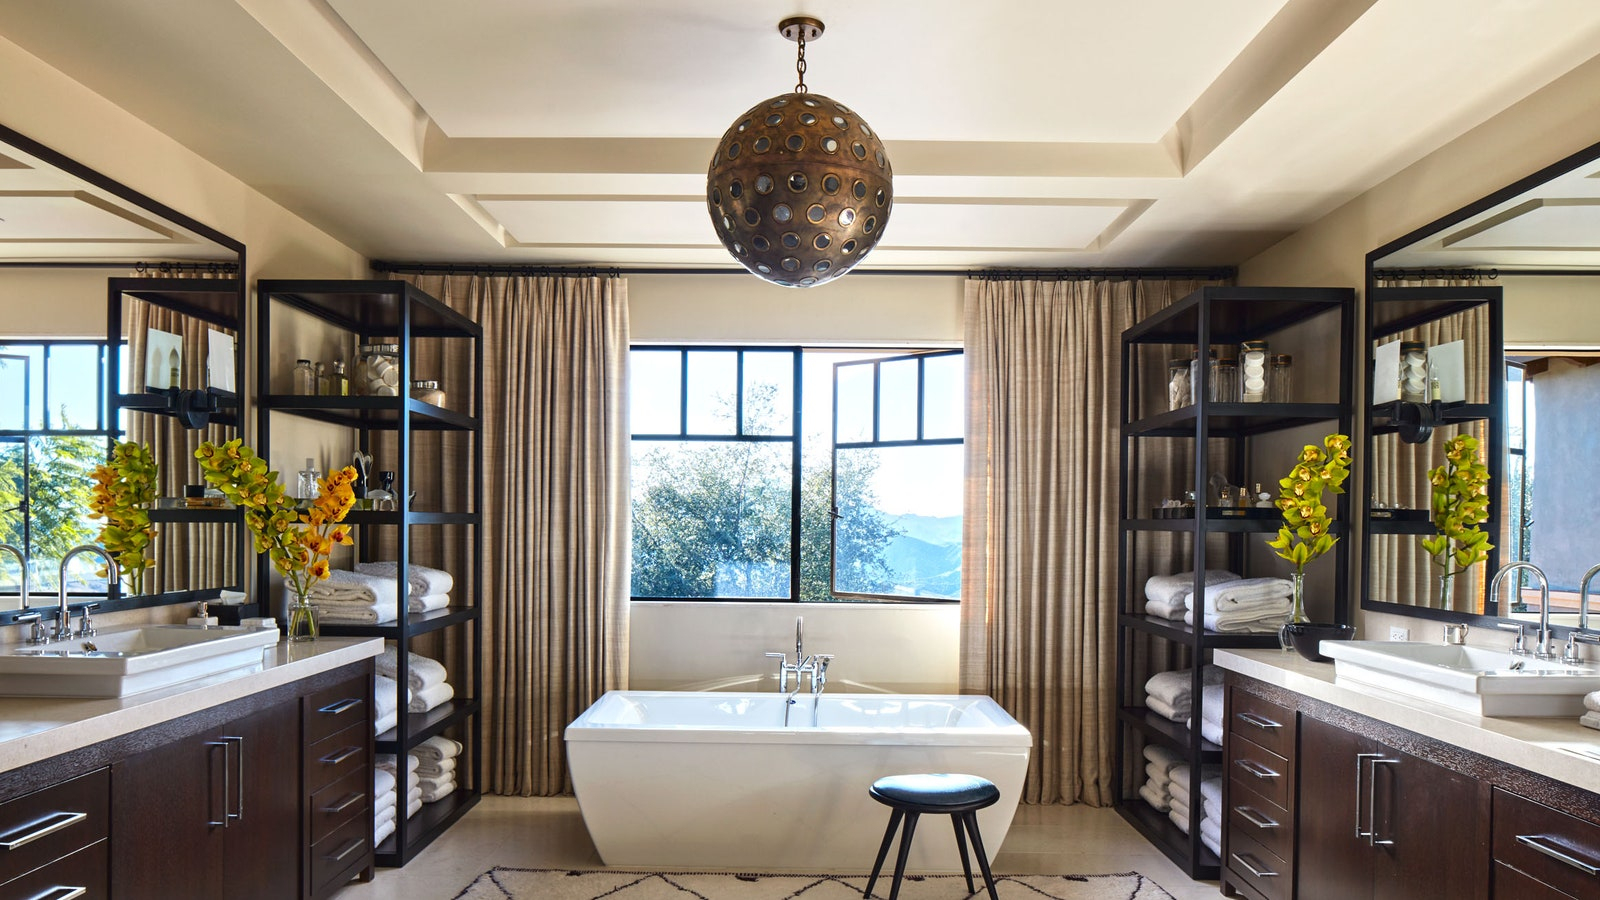 Get The Look: Master Bathroom Design Ideas From Kourtney avec Best Bathroom Remodel Calabasas 